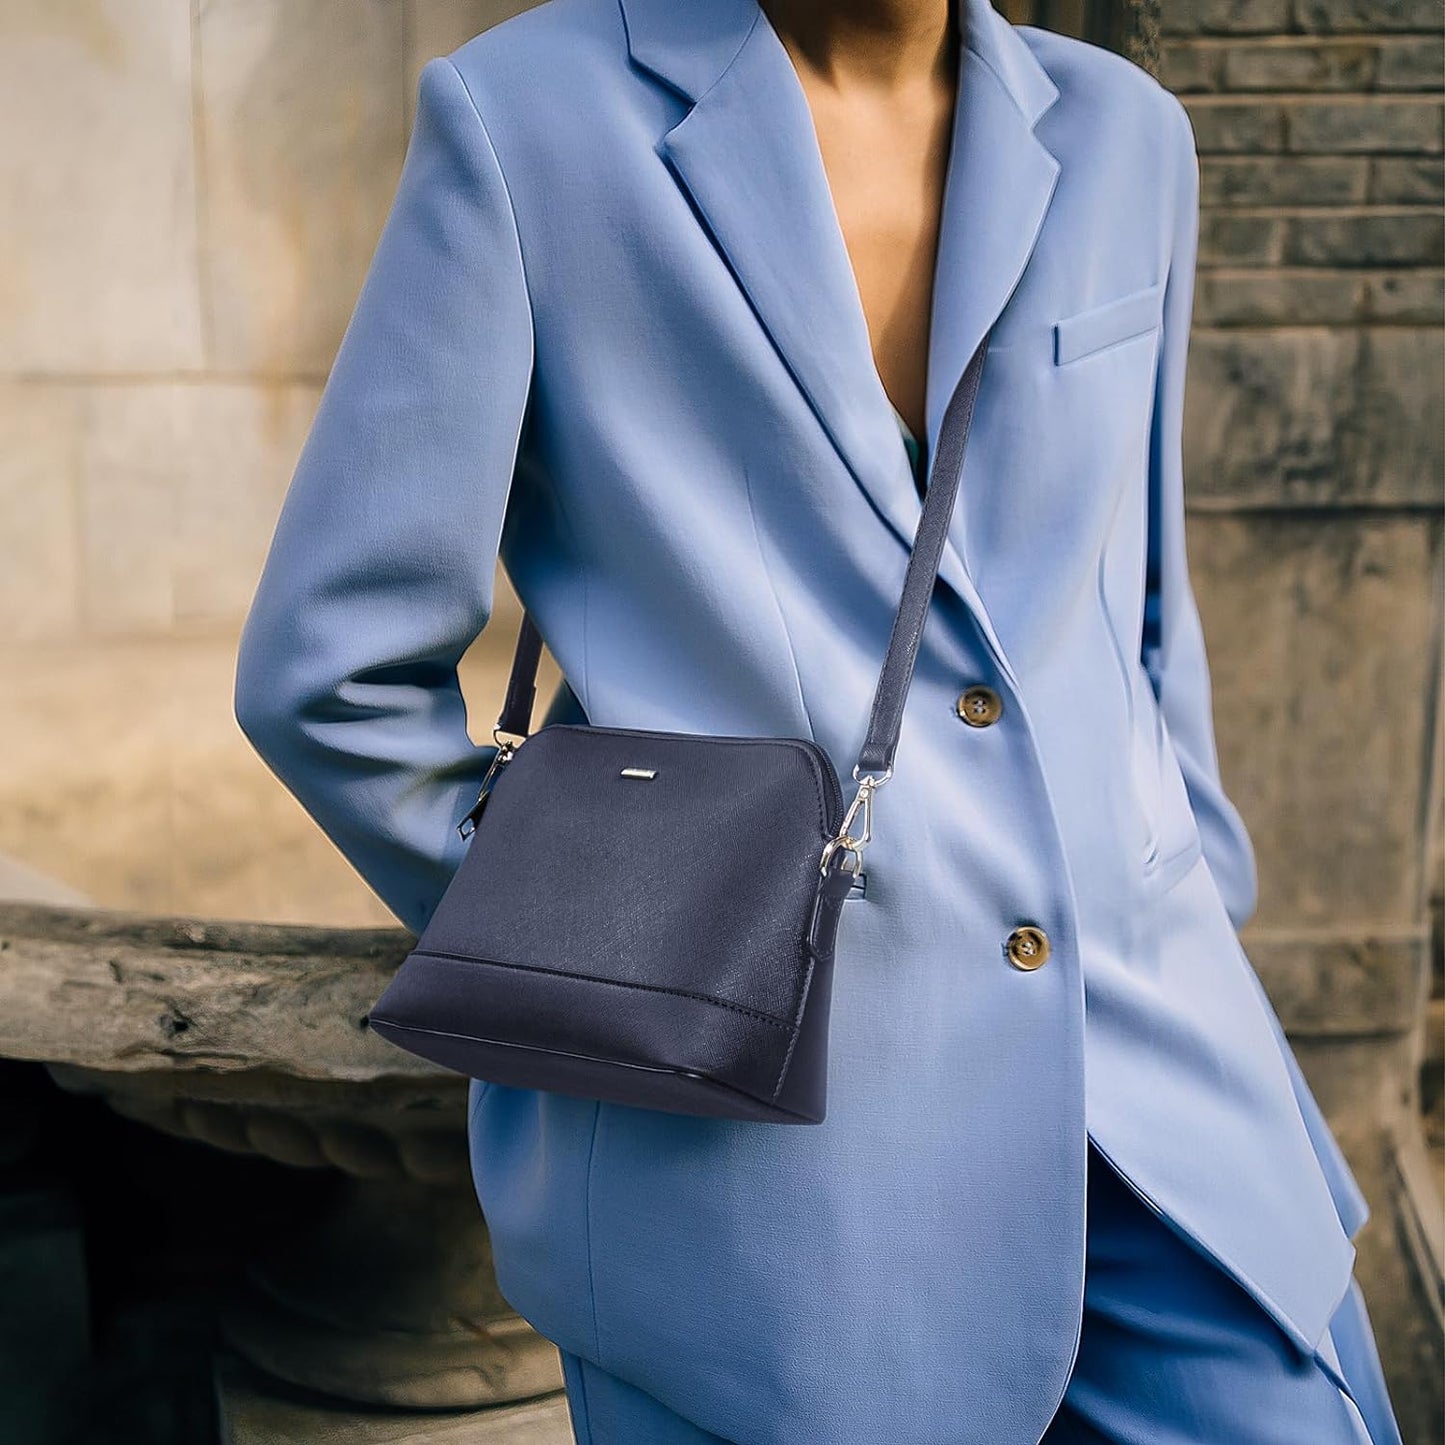 Purses and Handbags for Women Fashion Tote Bags Shoulder Bag Top Handle Satchel Bags Purse Set 3Pcs